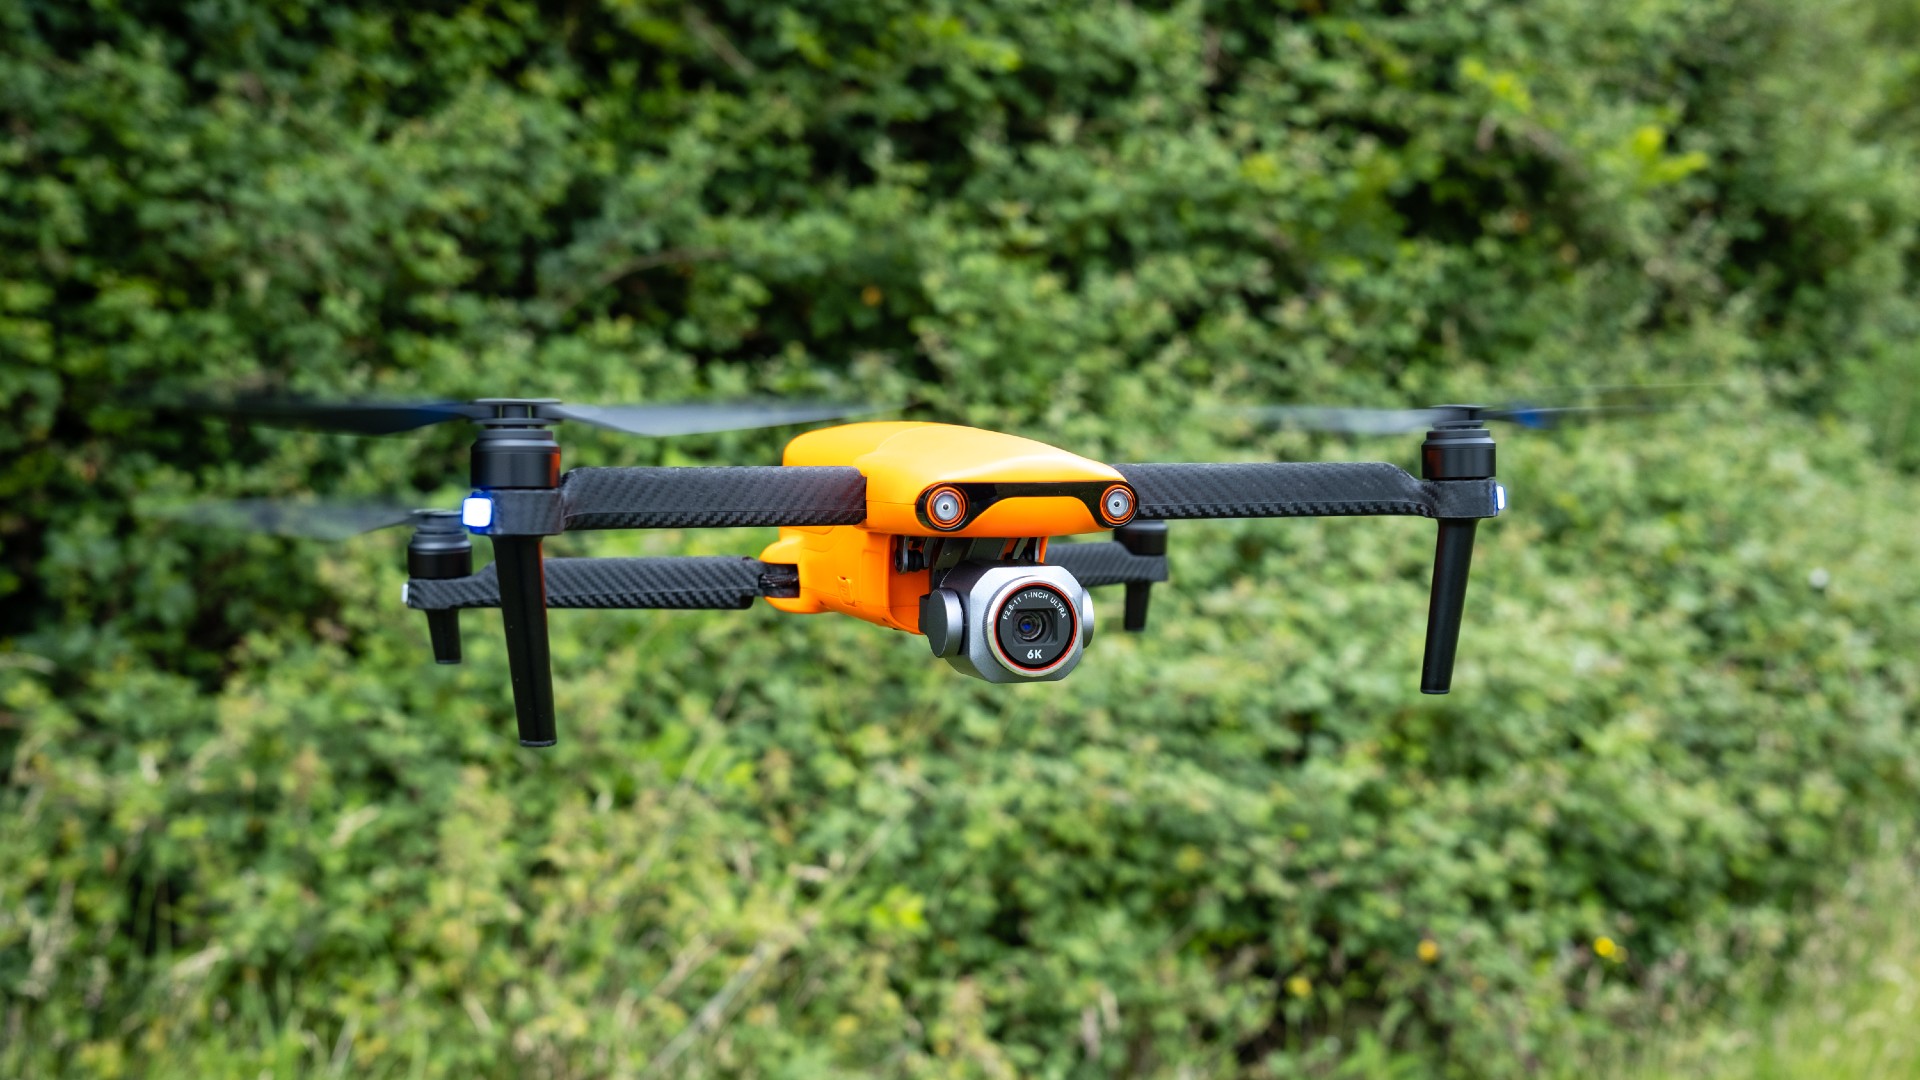 Best drones for beginners 2021: Entry-level models